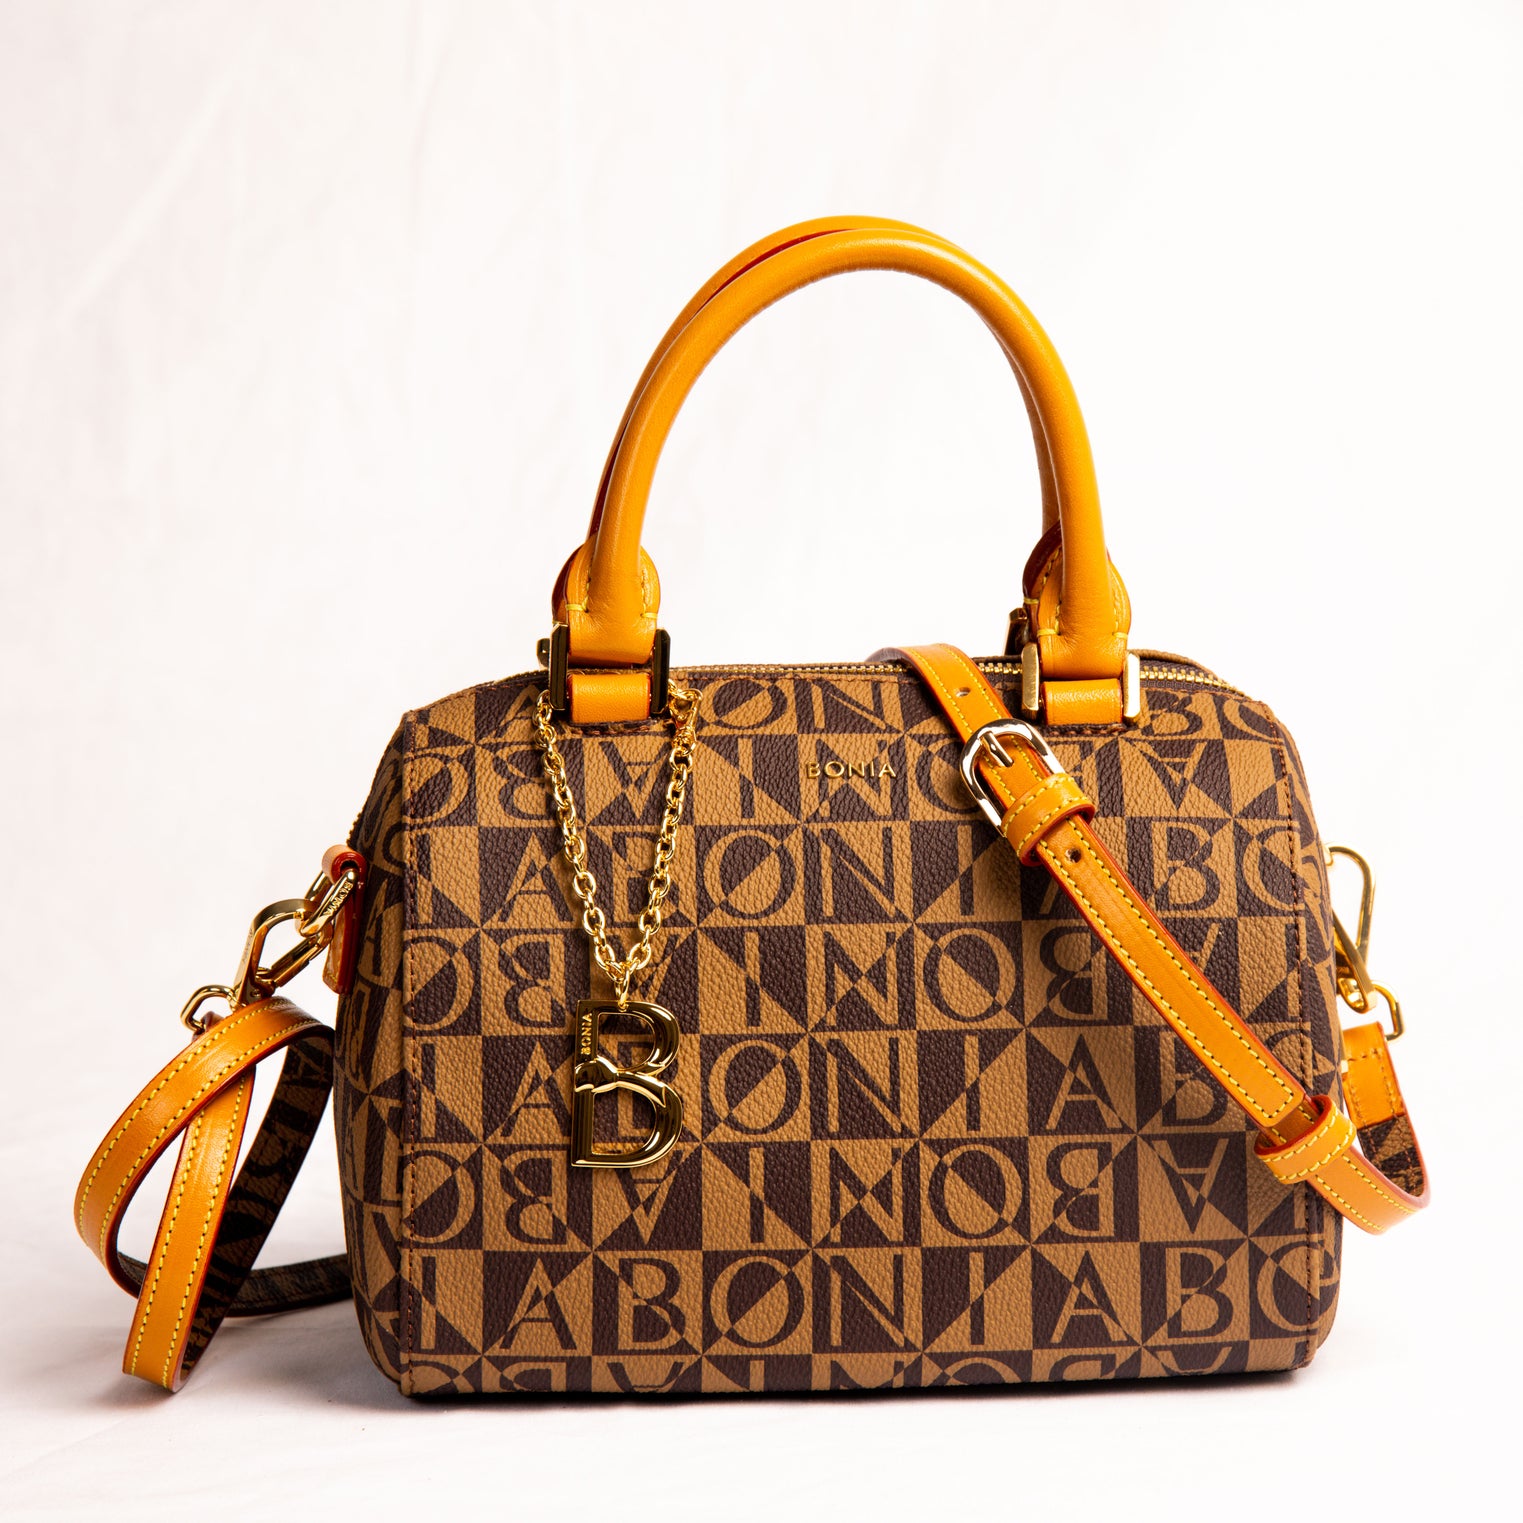 BONIA 23001 Monogram Handbag Shoulder Bag – TasBatam168